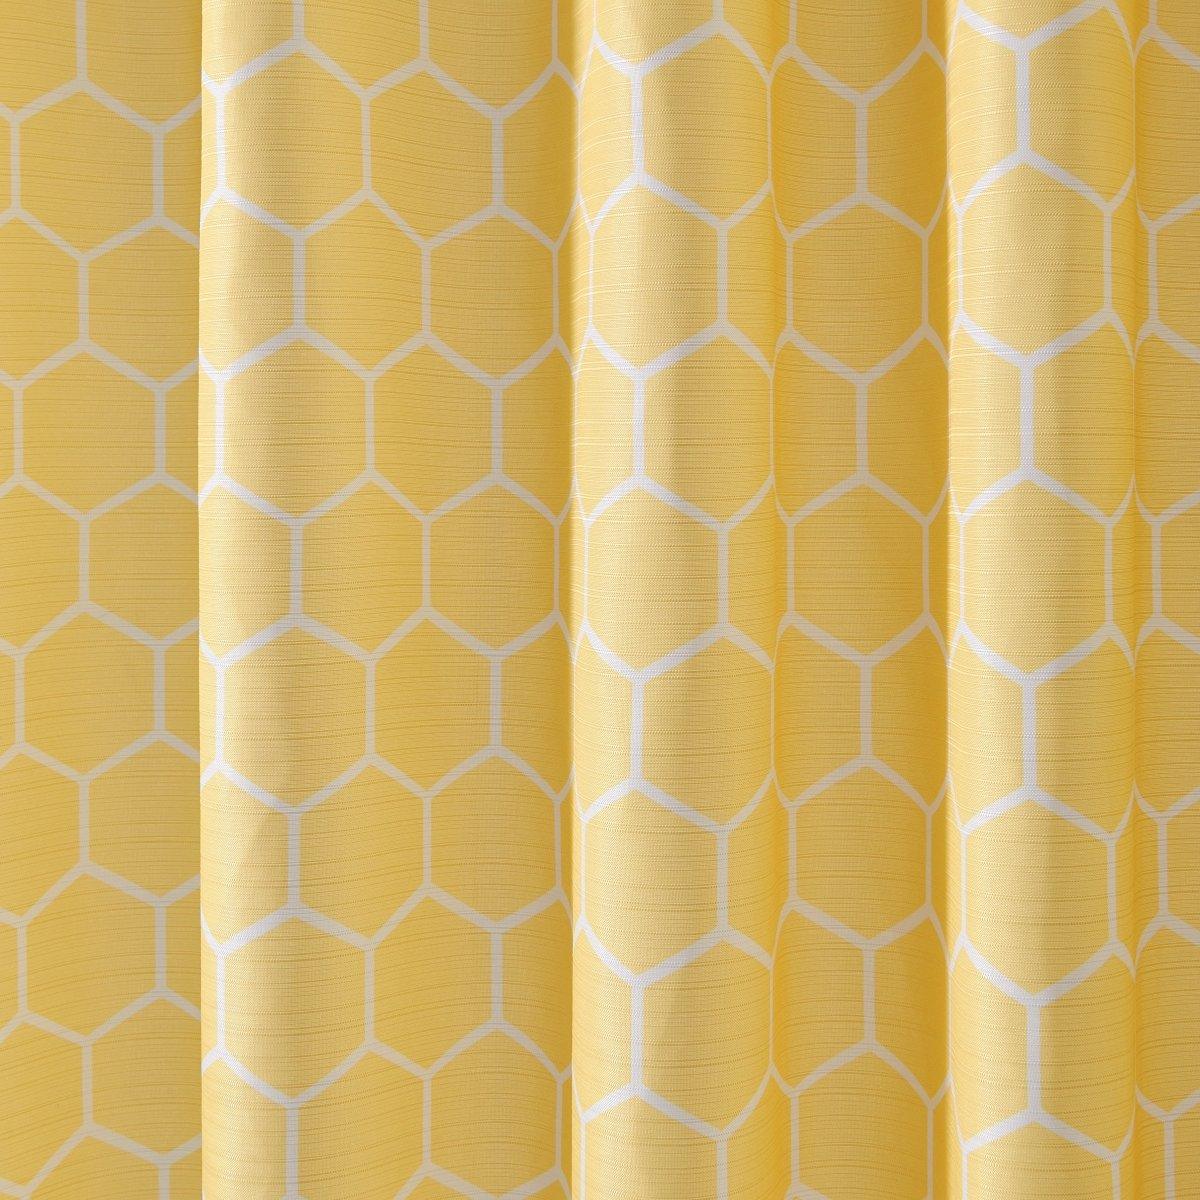 13pc Hooks Polyester Shower Curtain Set - Spirit Linen| Yellow Honeycomb